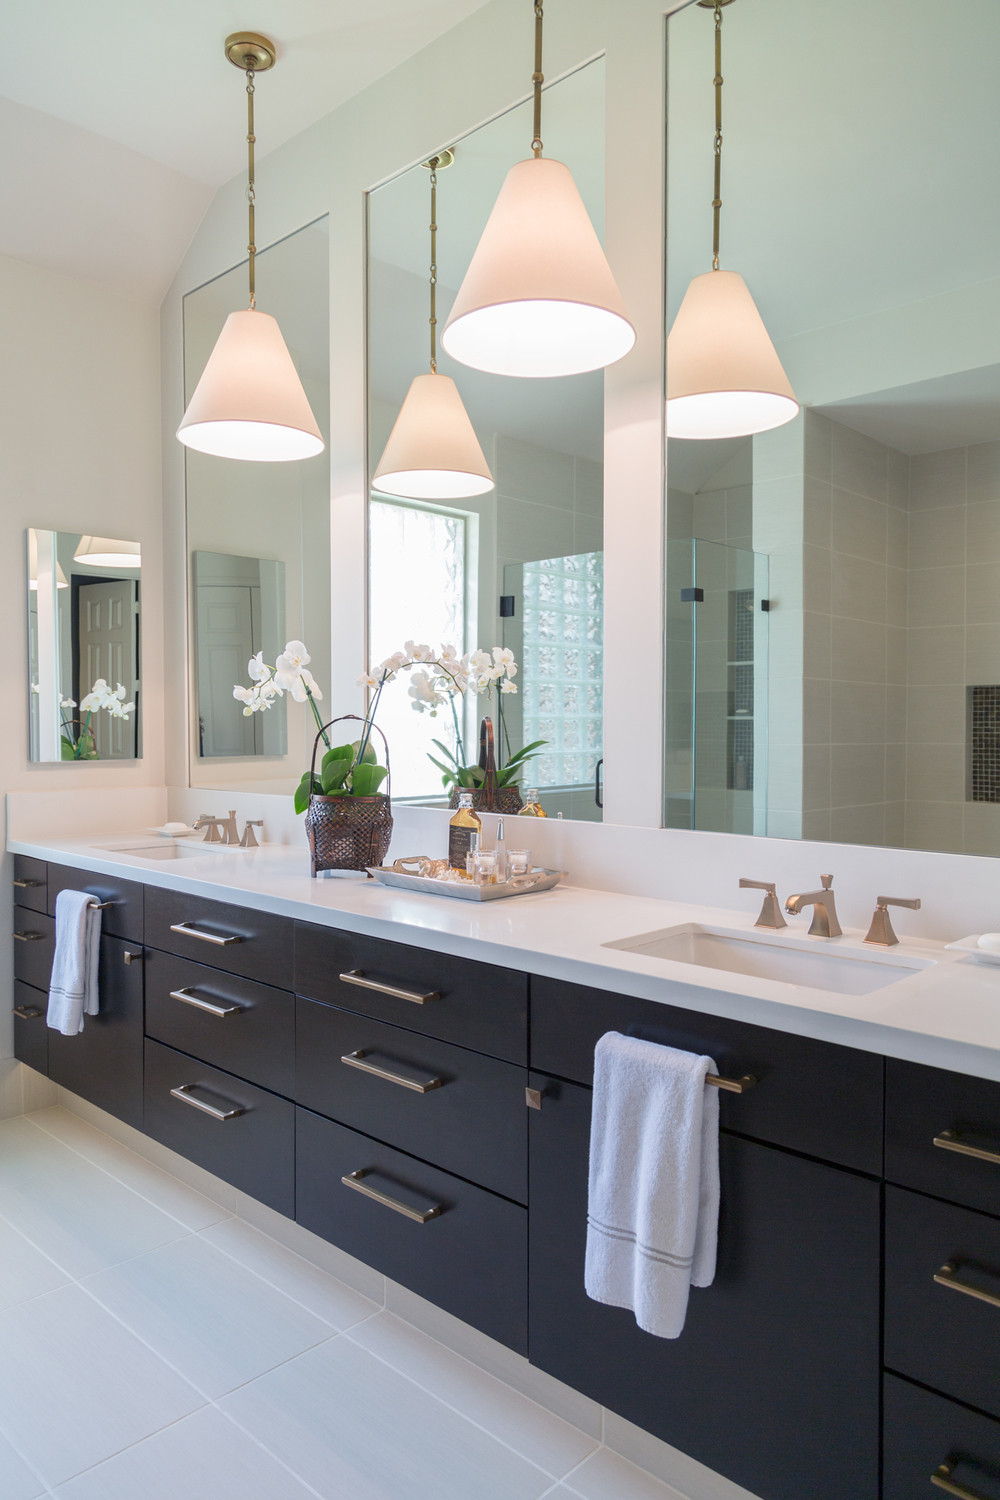 Master Bathroom Mirror Ideas
 BEFORE & AFTER A Master Bathroom Remodel Surprises